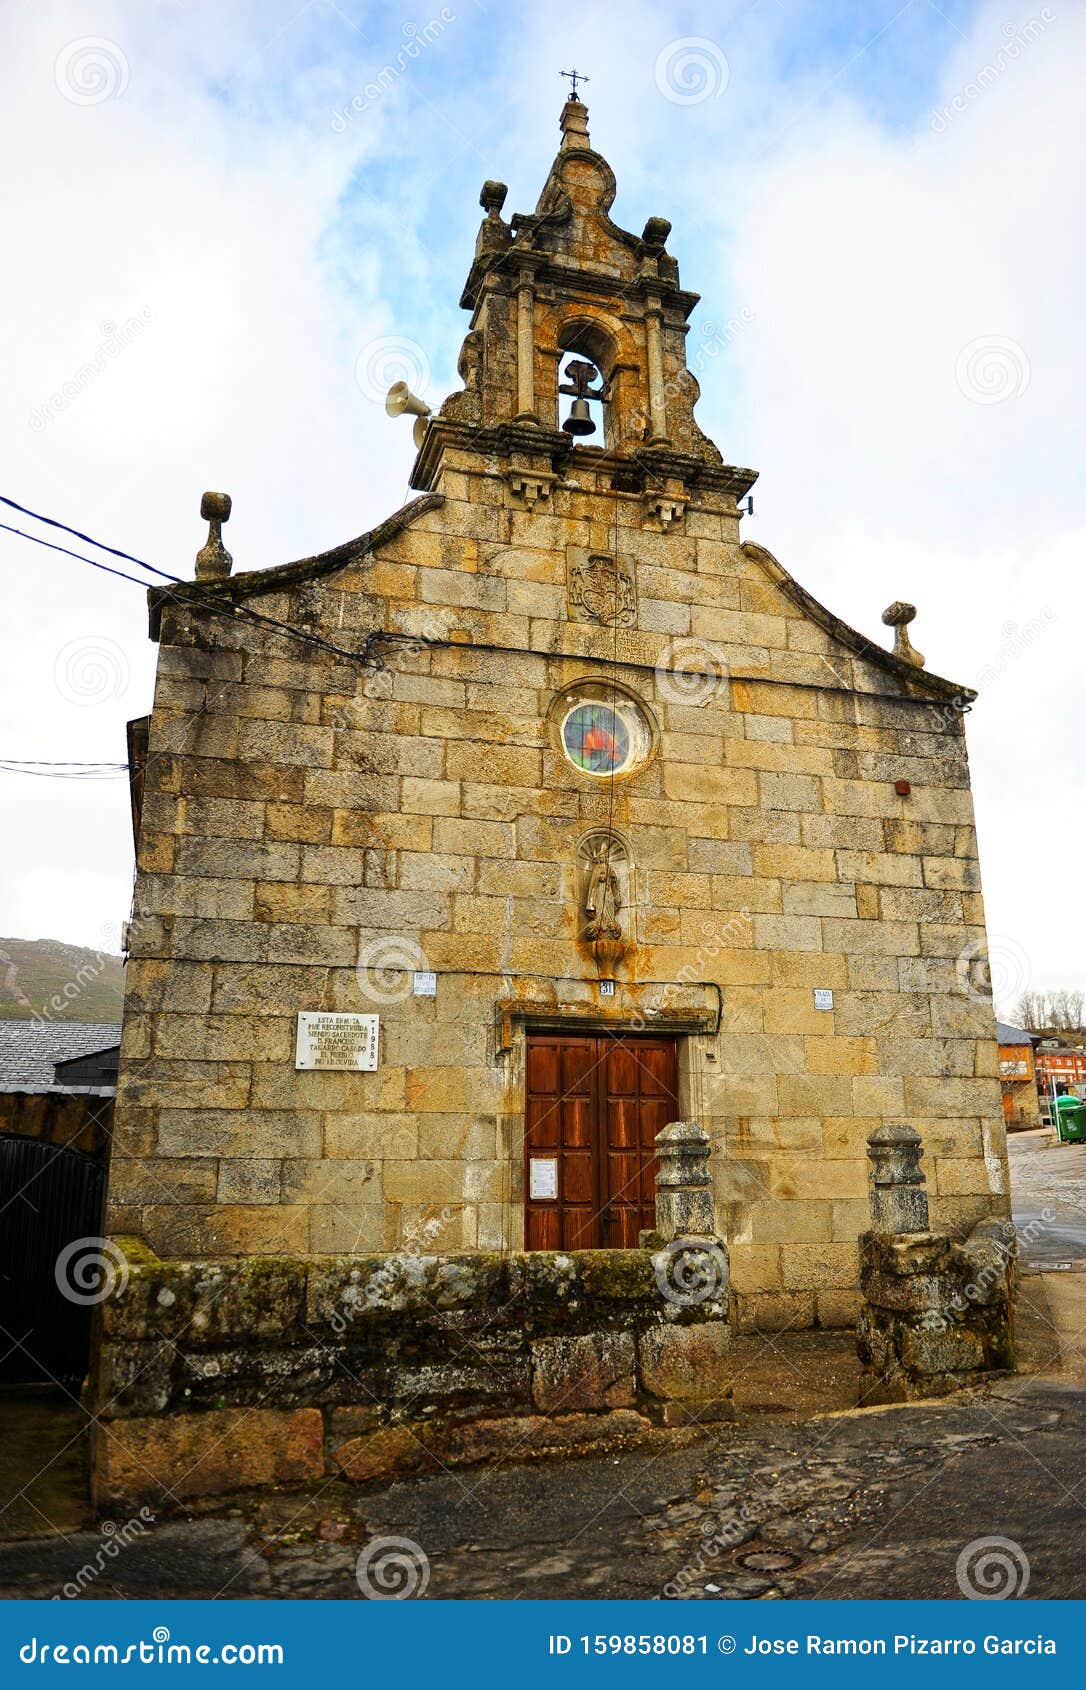 capilla de guadalupe en requejo de sanabria en la provincia de zamora, castilla leon, espaÃÂ±a